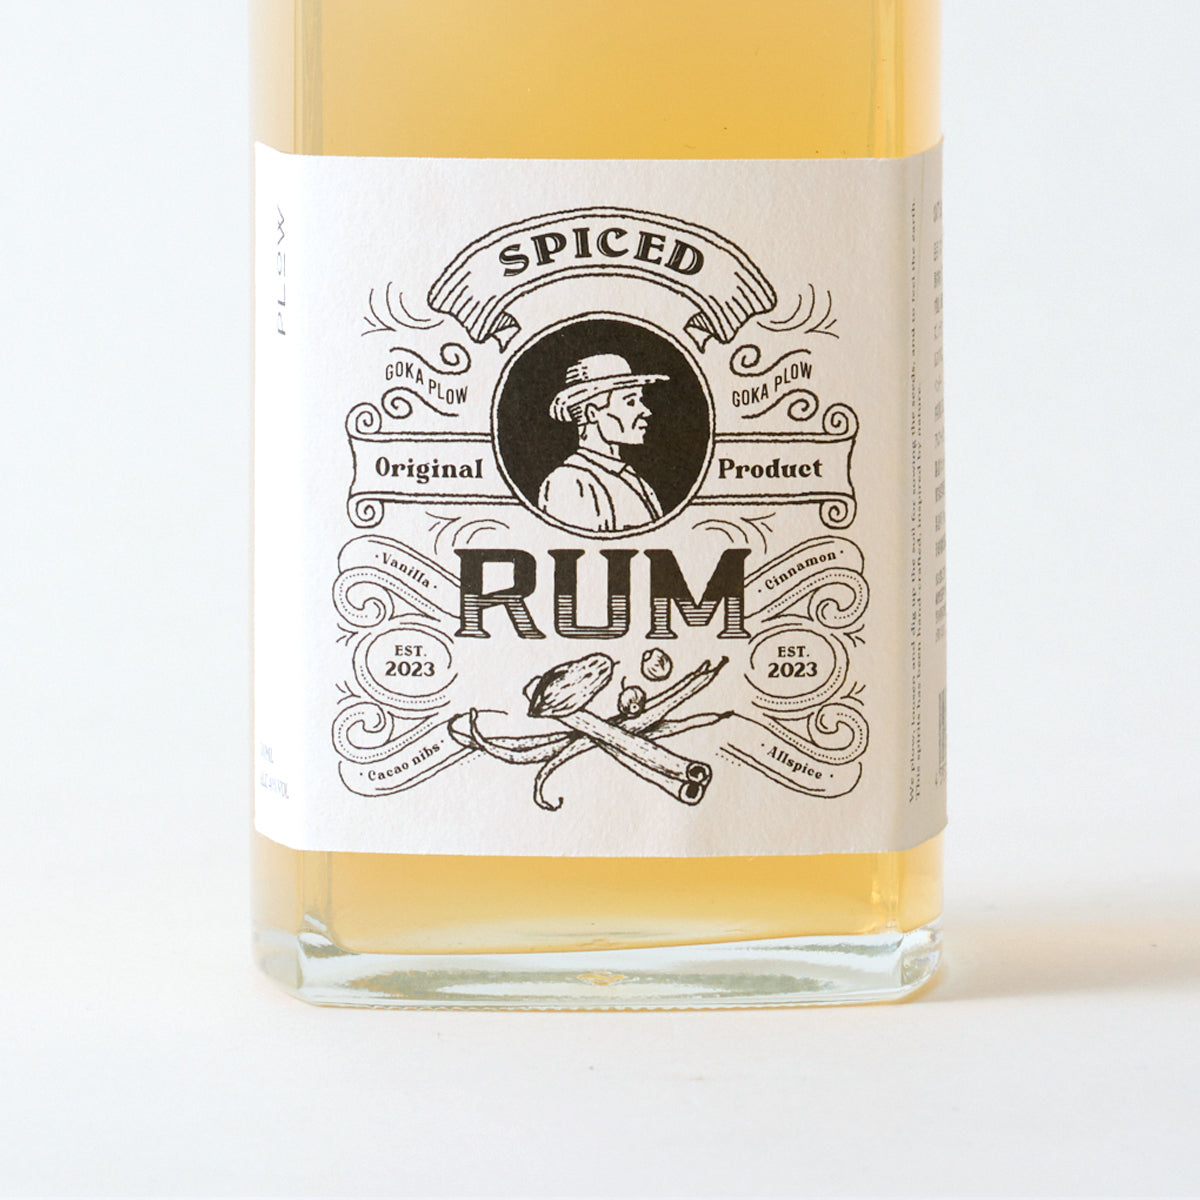 007 Spiced Rum